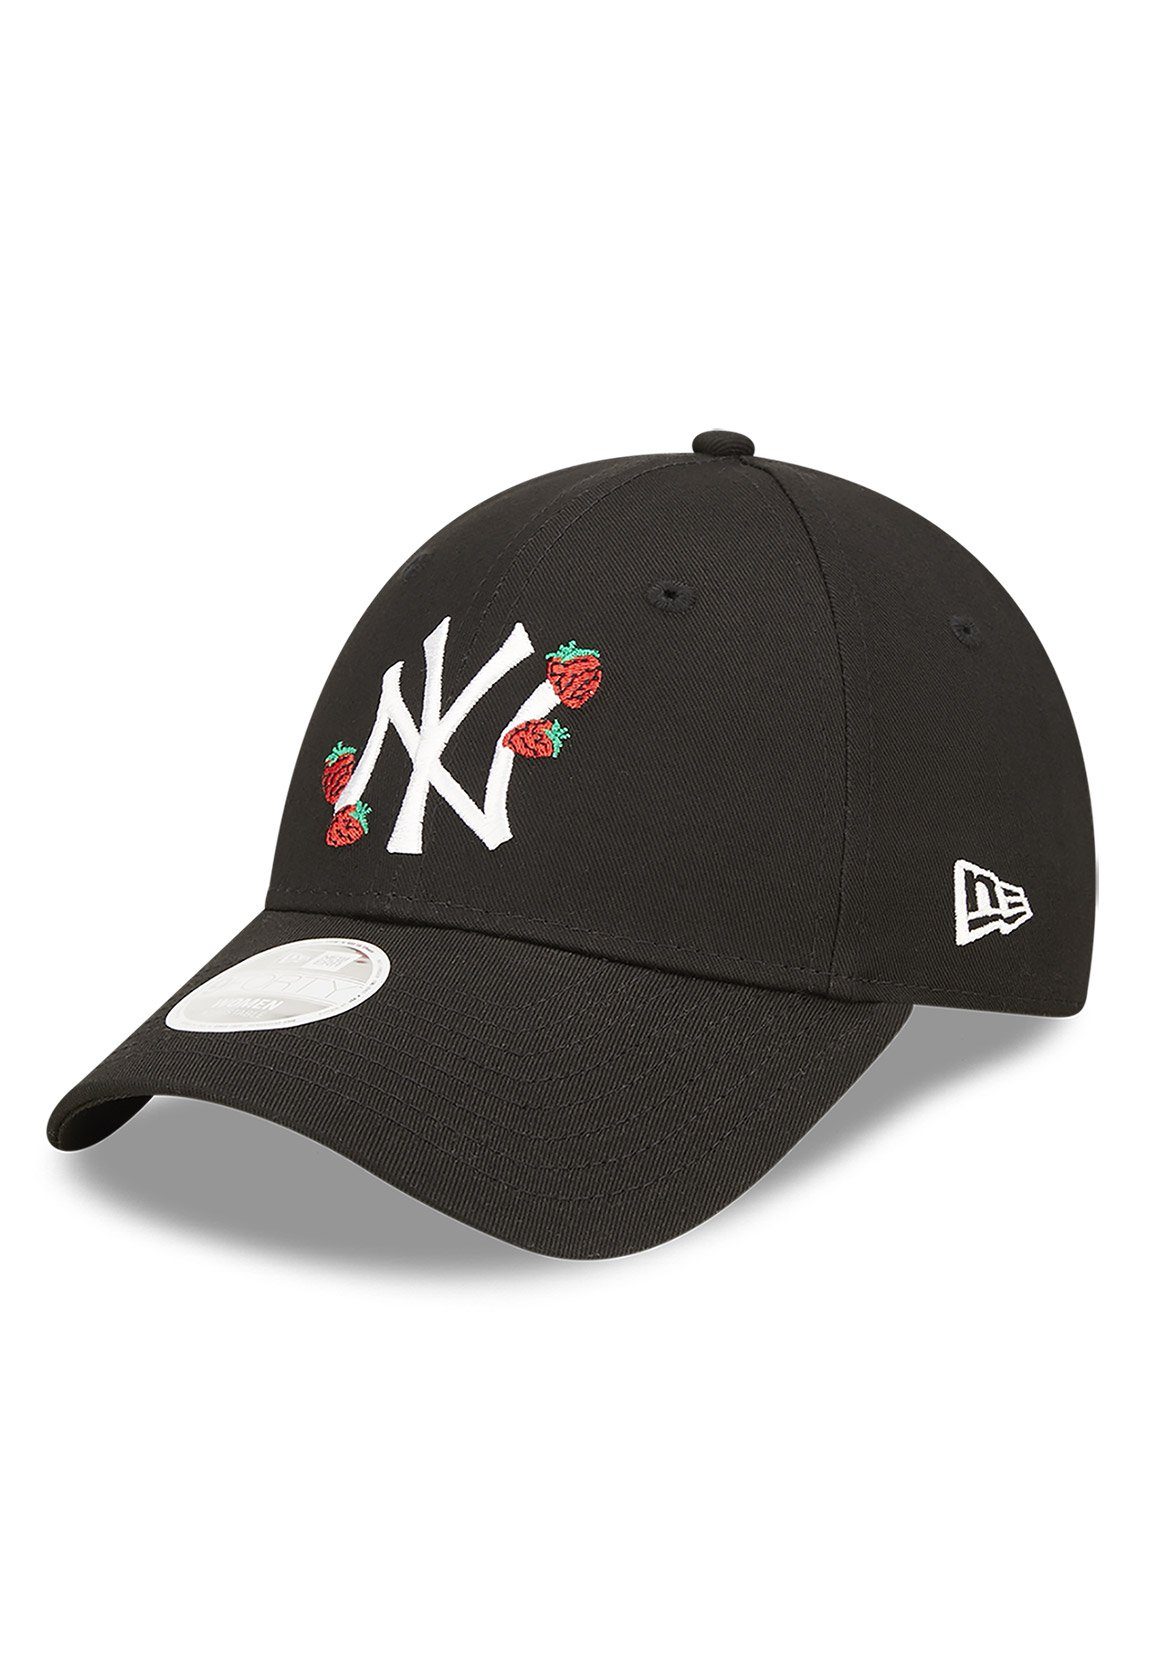 New Cap Cap Era New Strawberry YANKEES 9Forty Adjustable NY Era Wmns Baseball Damen